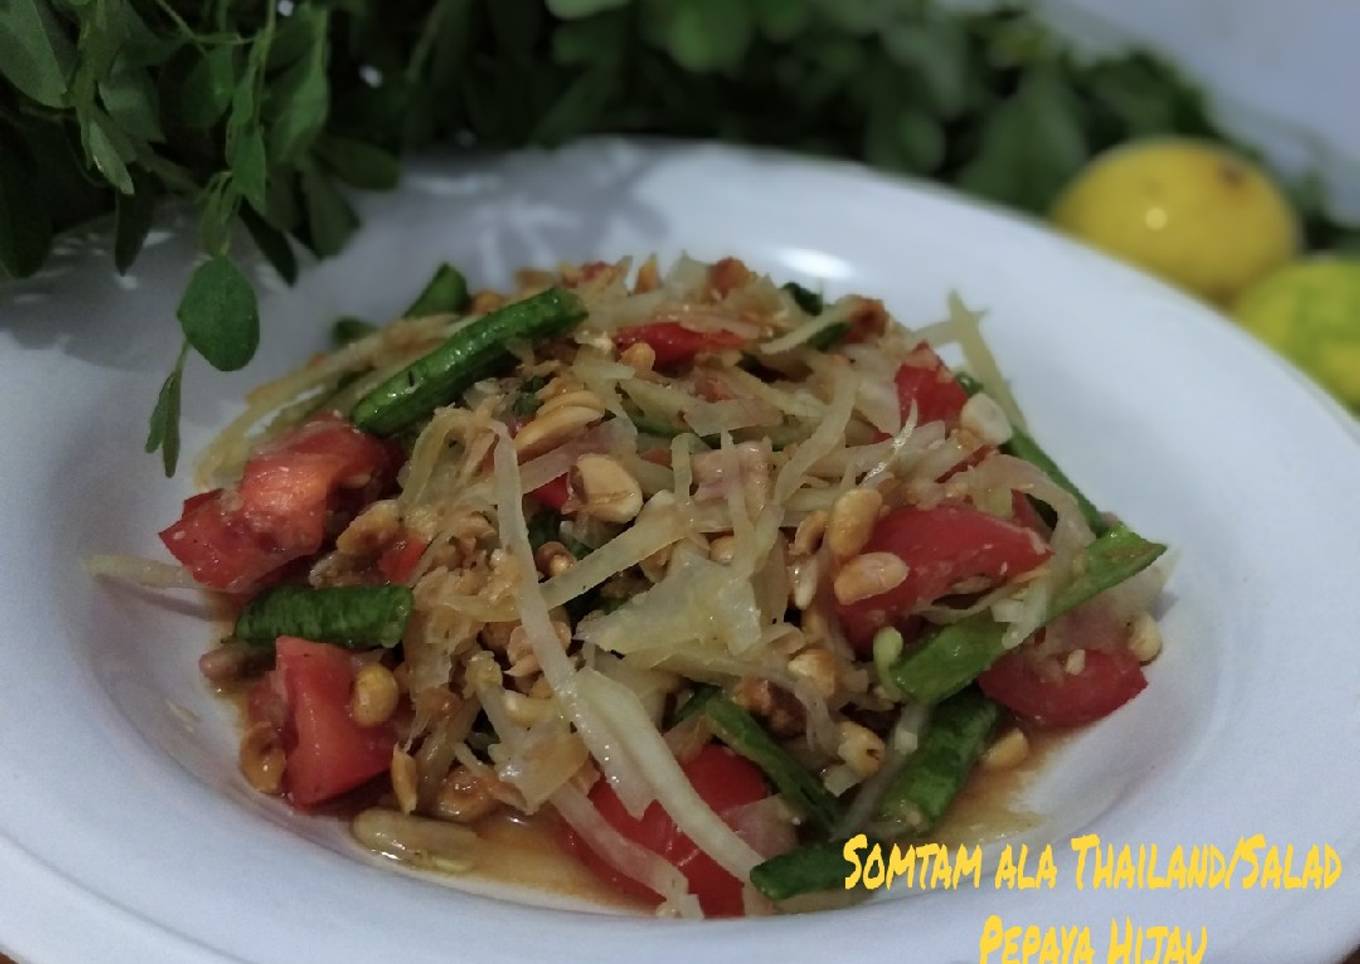 Somtam ala thailand / salad pepaya hijau